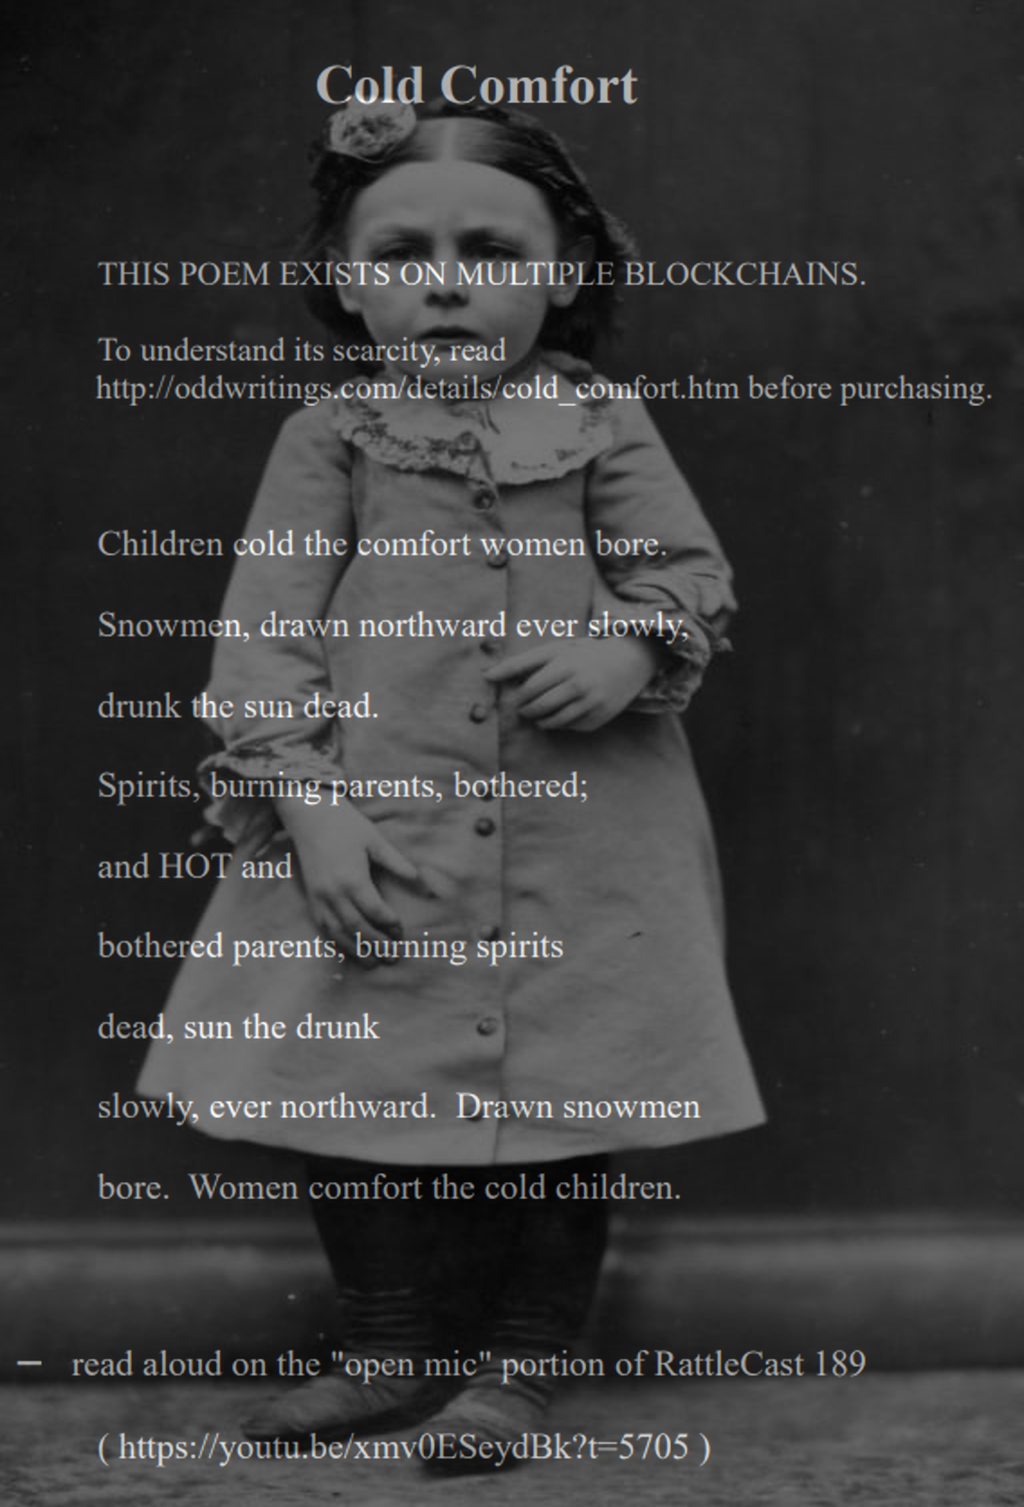 poem text on image